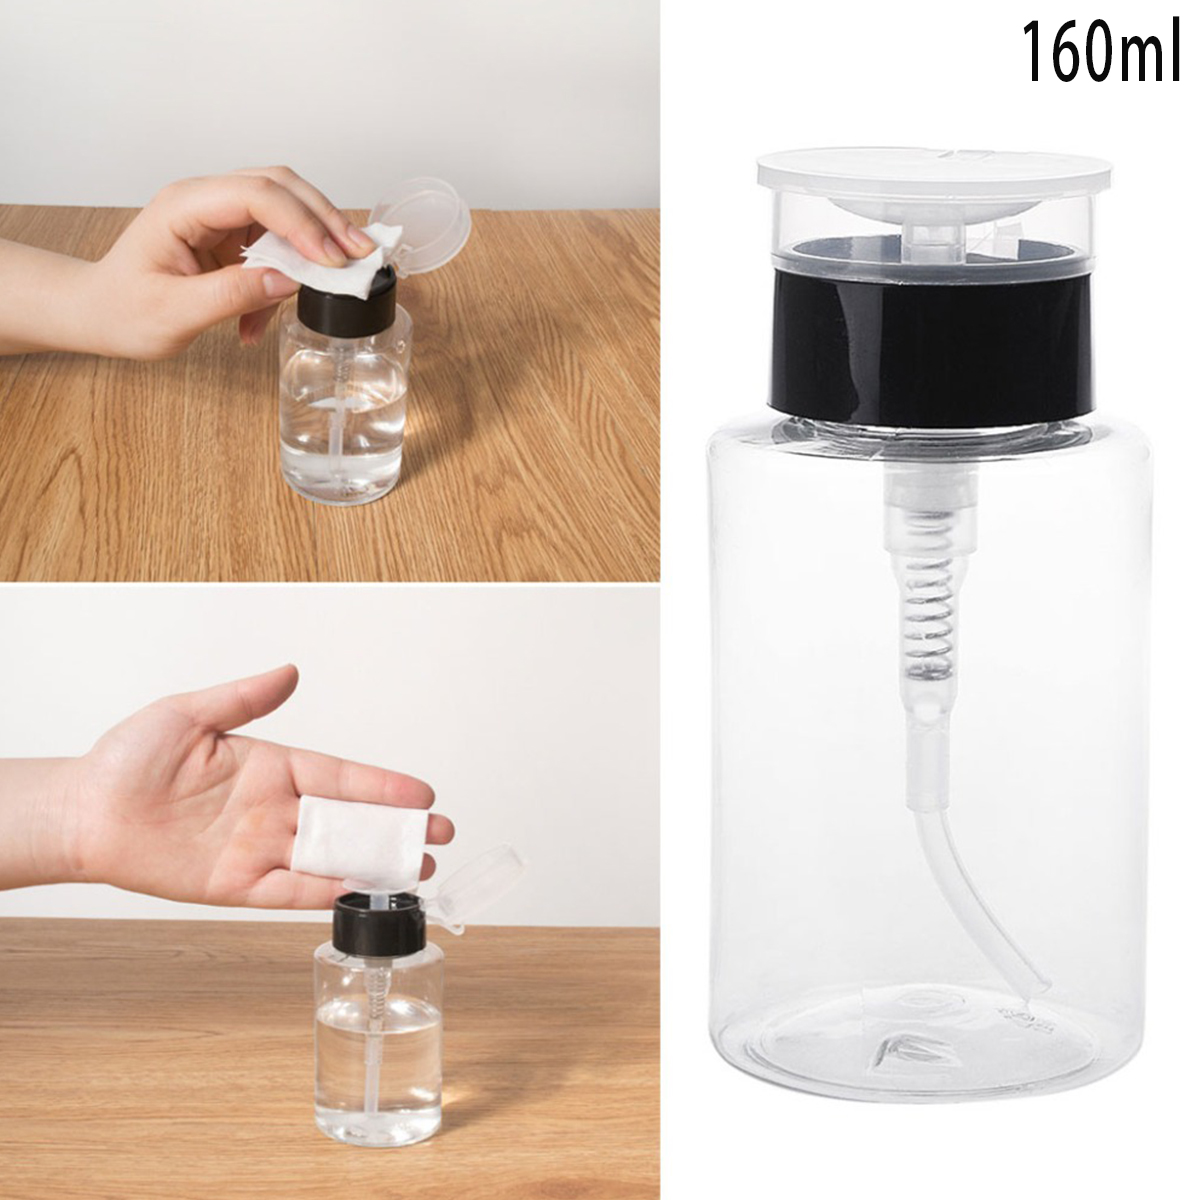 160ml-Press-Bottle-Pump-Dispenser-Atomizer-Spray-Bottles-Liquid-Holder-Refillable-Bottles-1608331-2